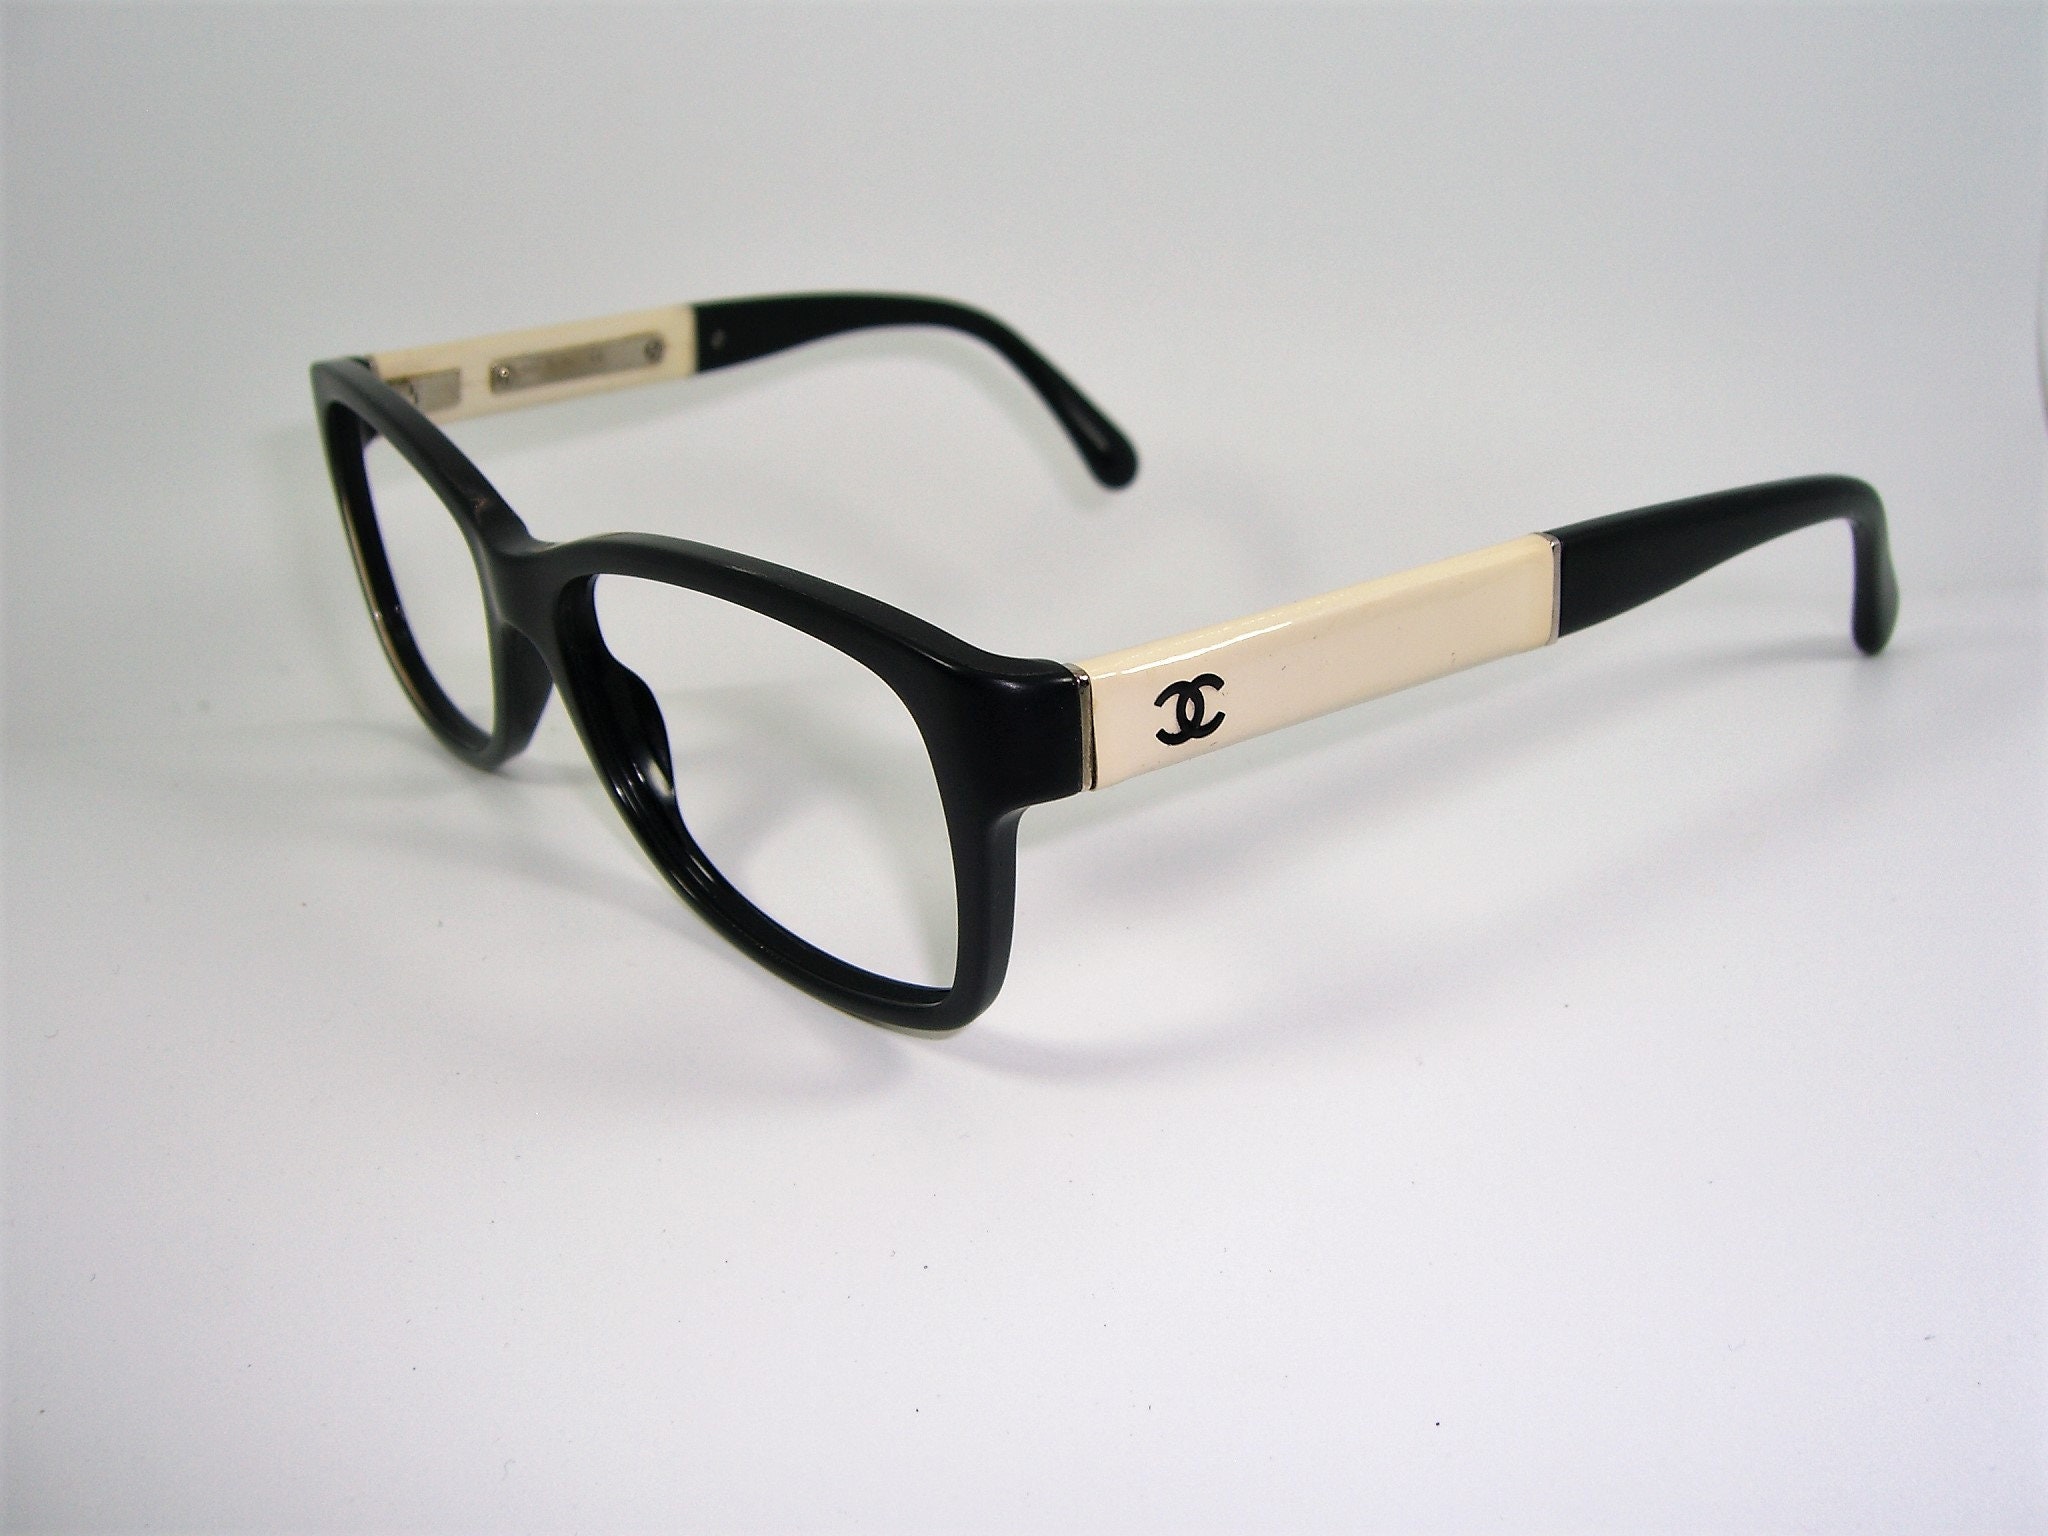 Chanel Eyeglasses Wayfarer Square Oval Frames Hyper 